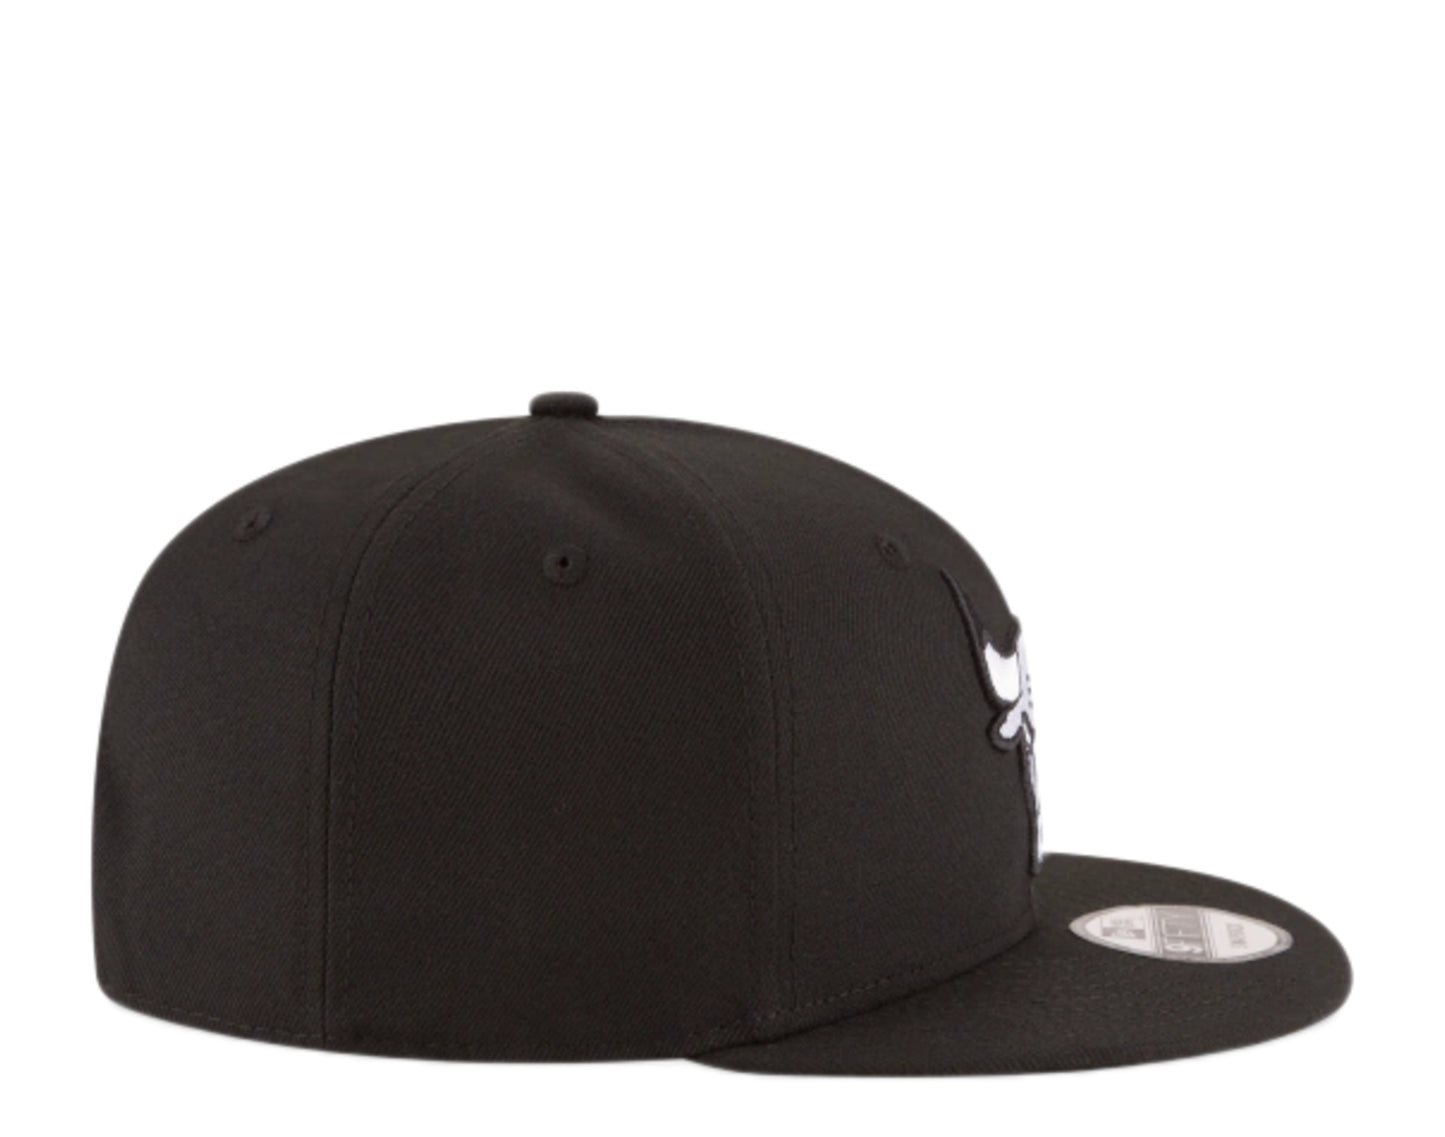 New Era 9Fifty NBA Chicago Bulls Black And White Snapback Hat